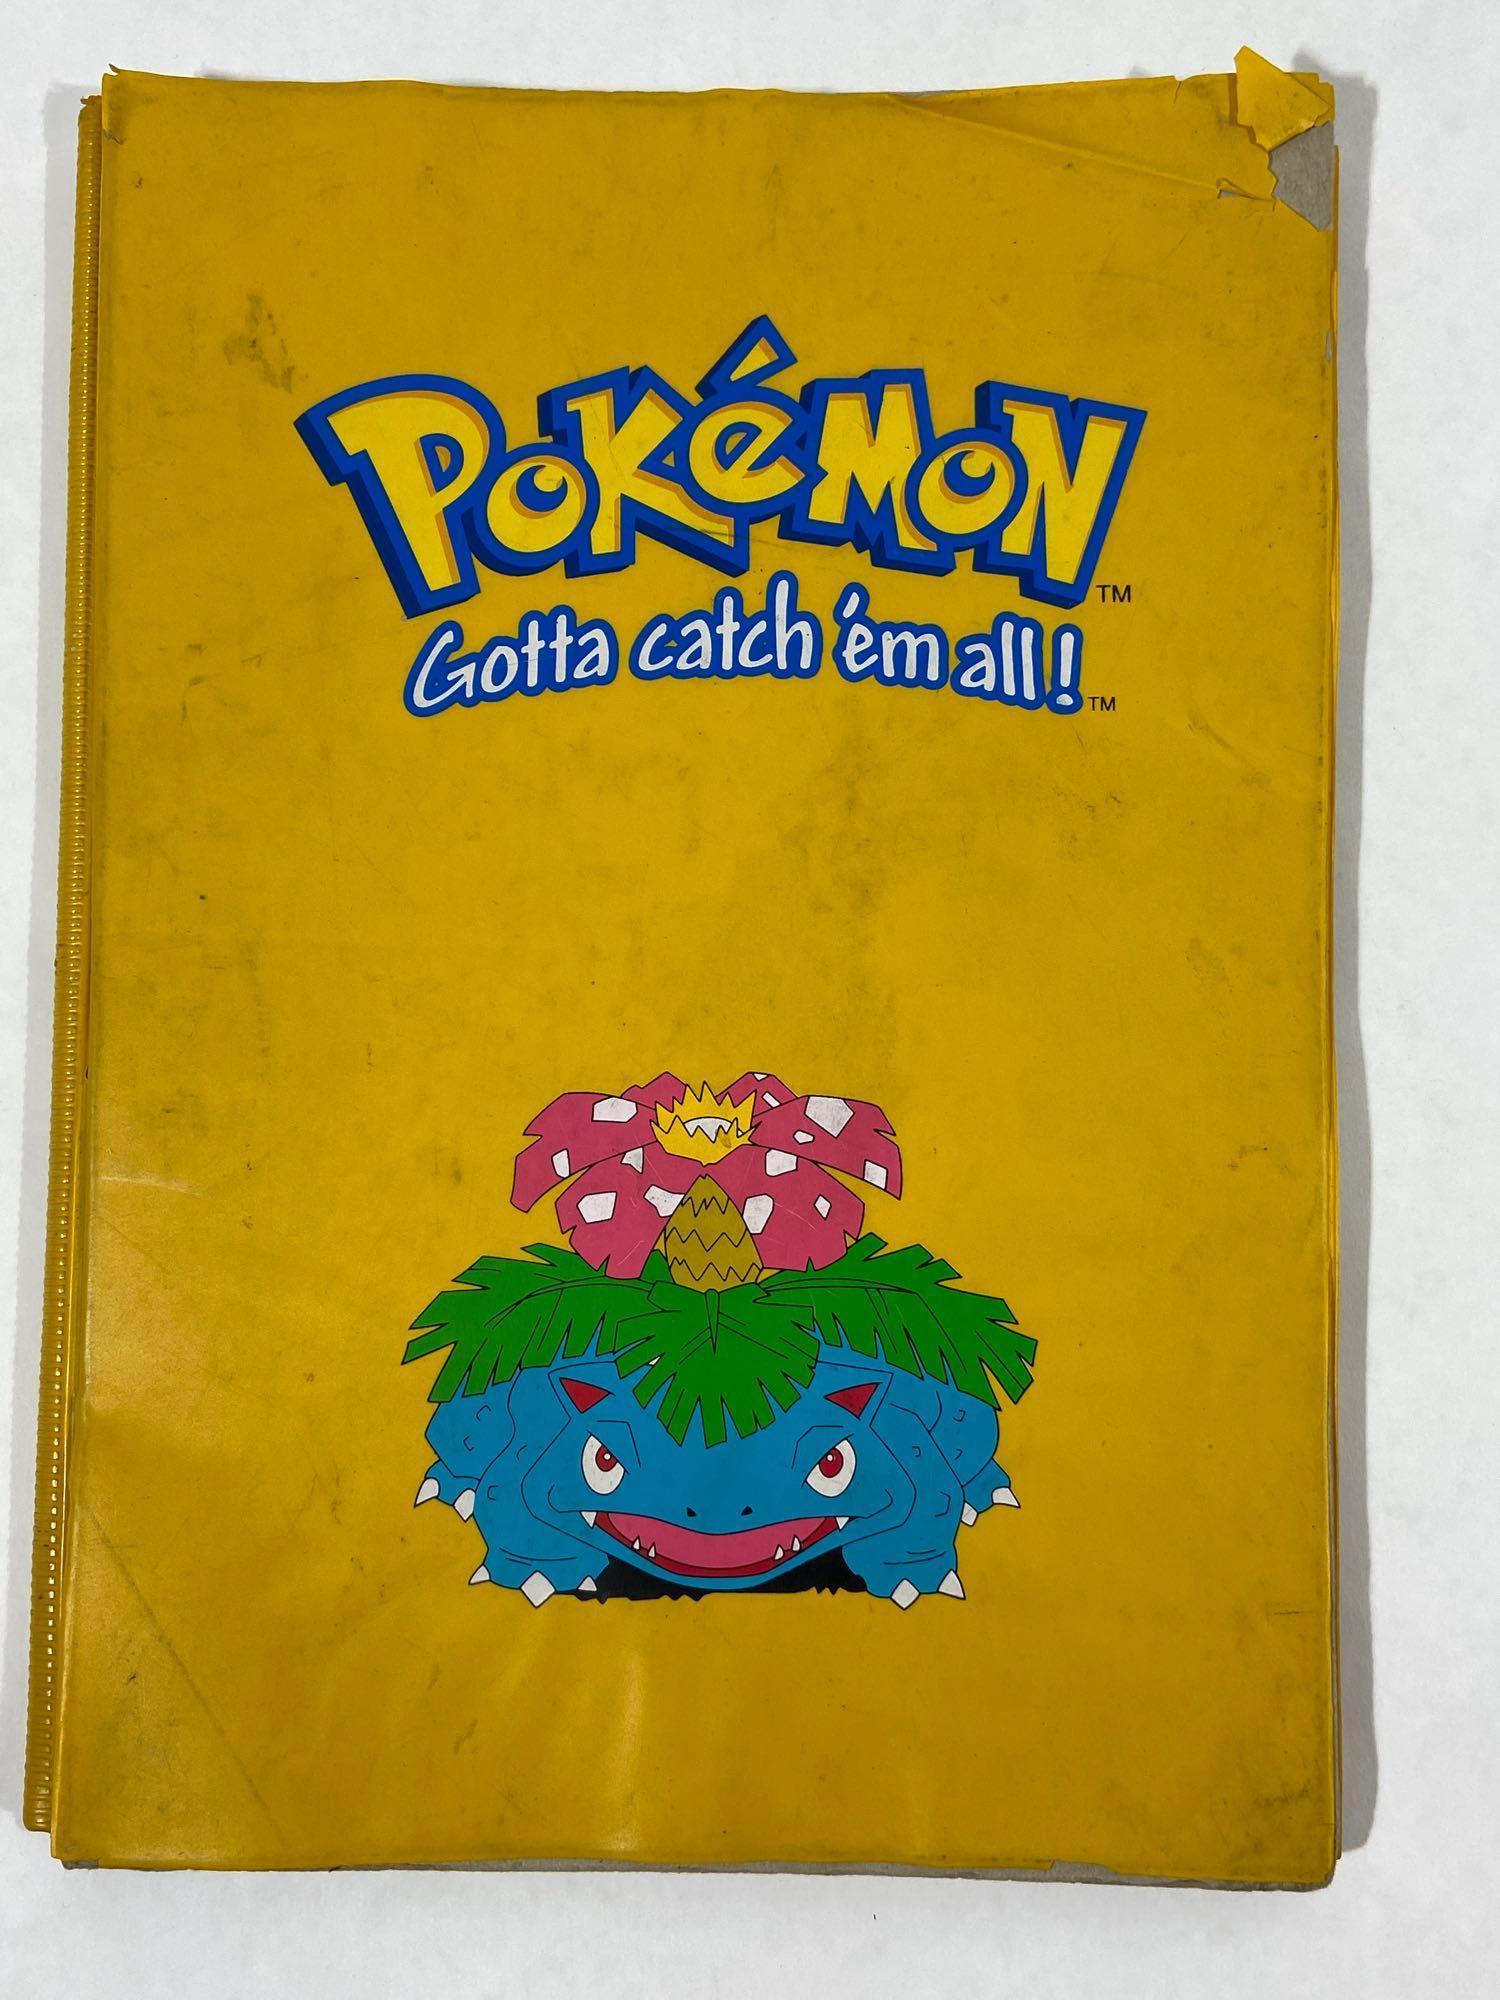 Pokemon binder with Cards, Pokemon Promo Cards & Memorabilia, binder of Japanese cards